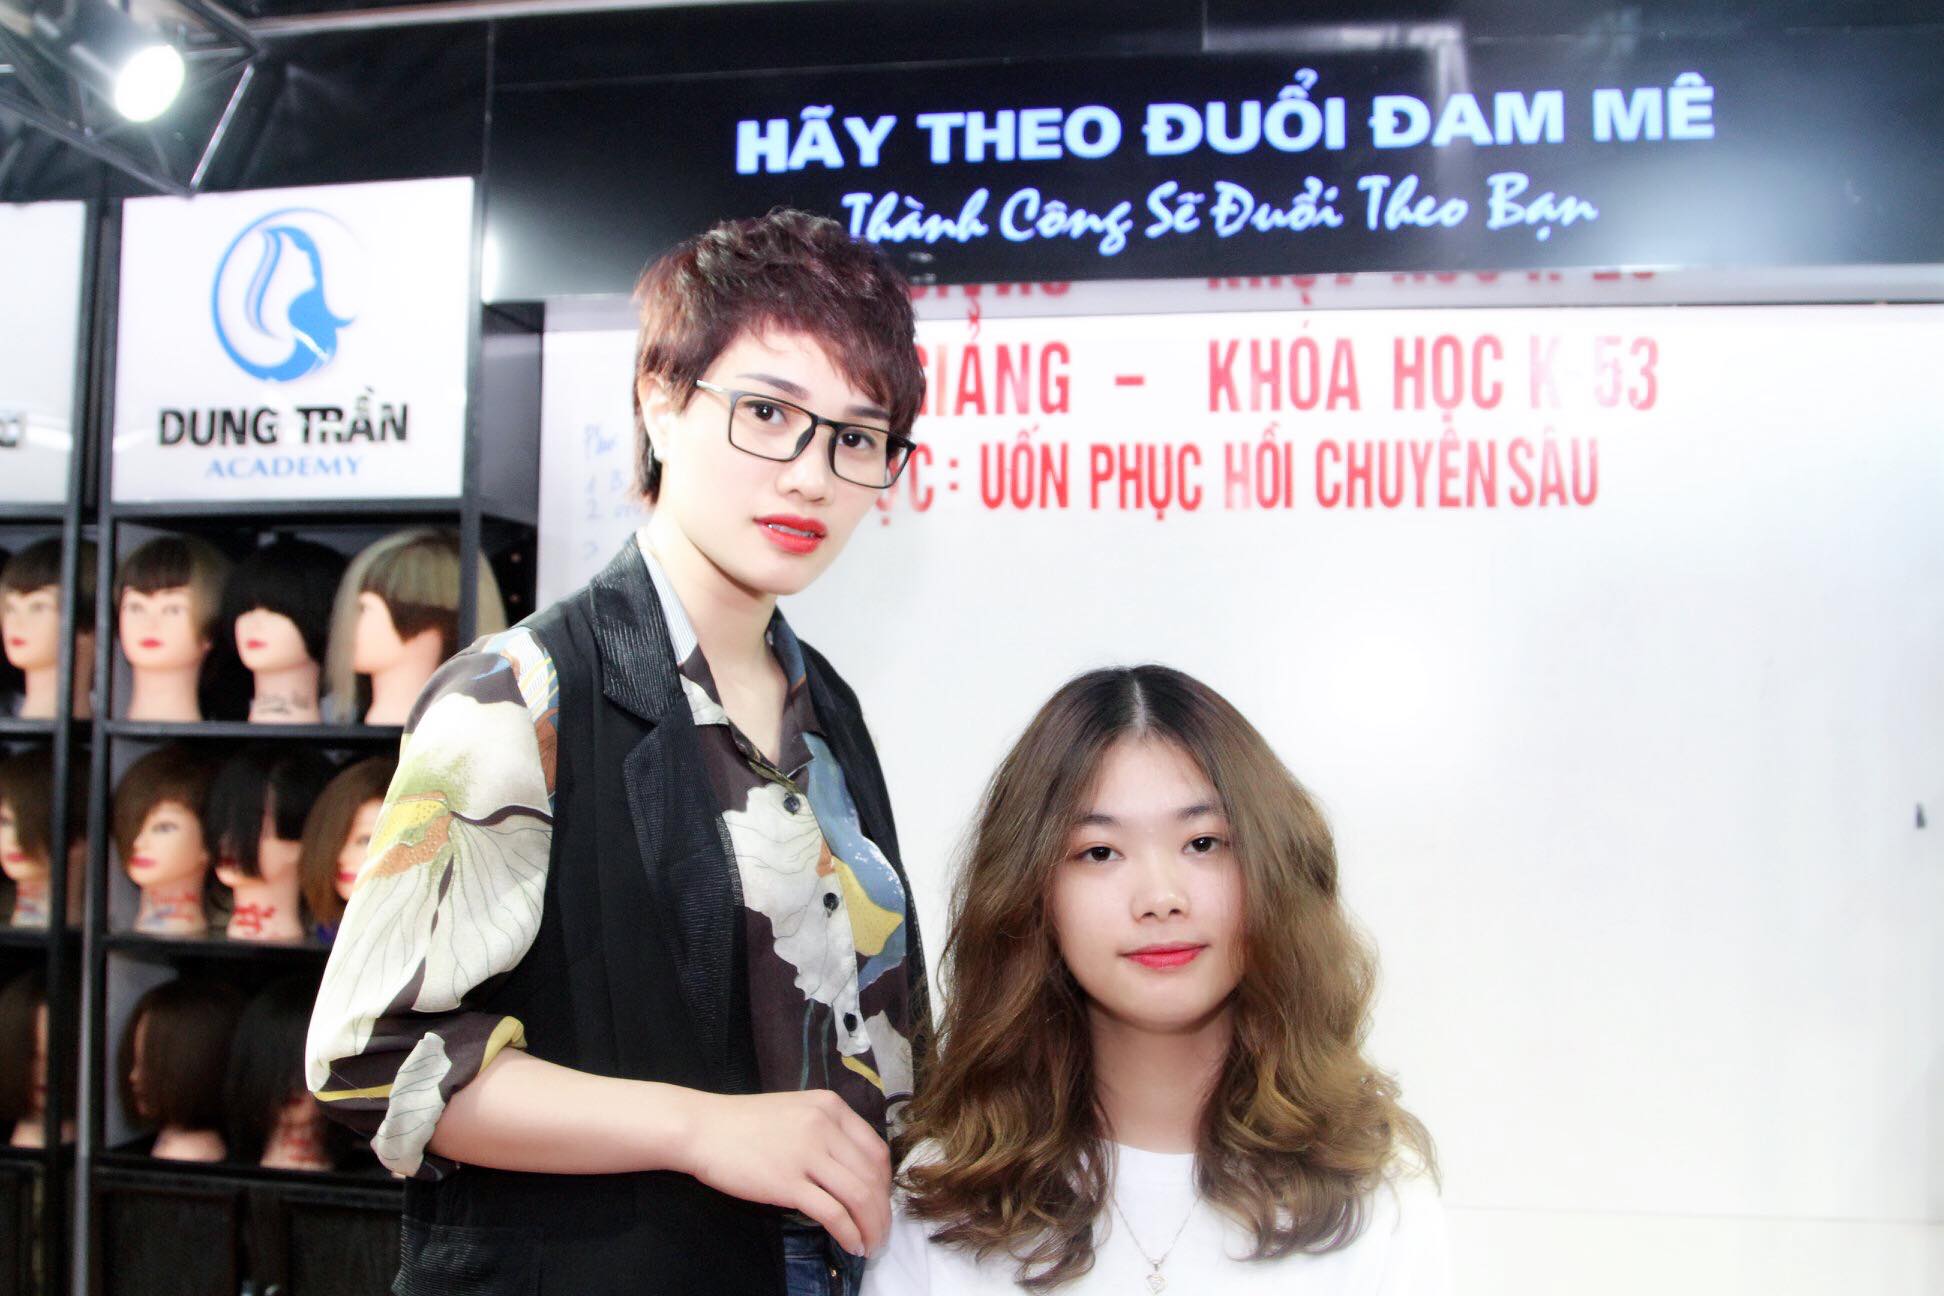 Dung Trần Hair Group